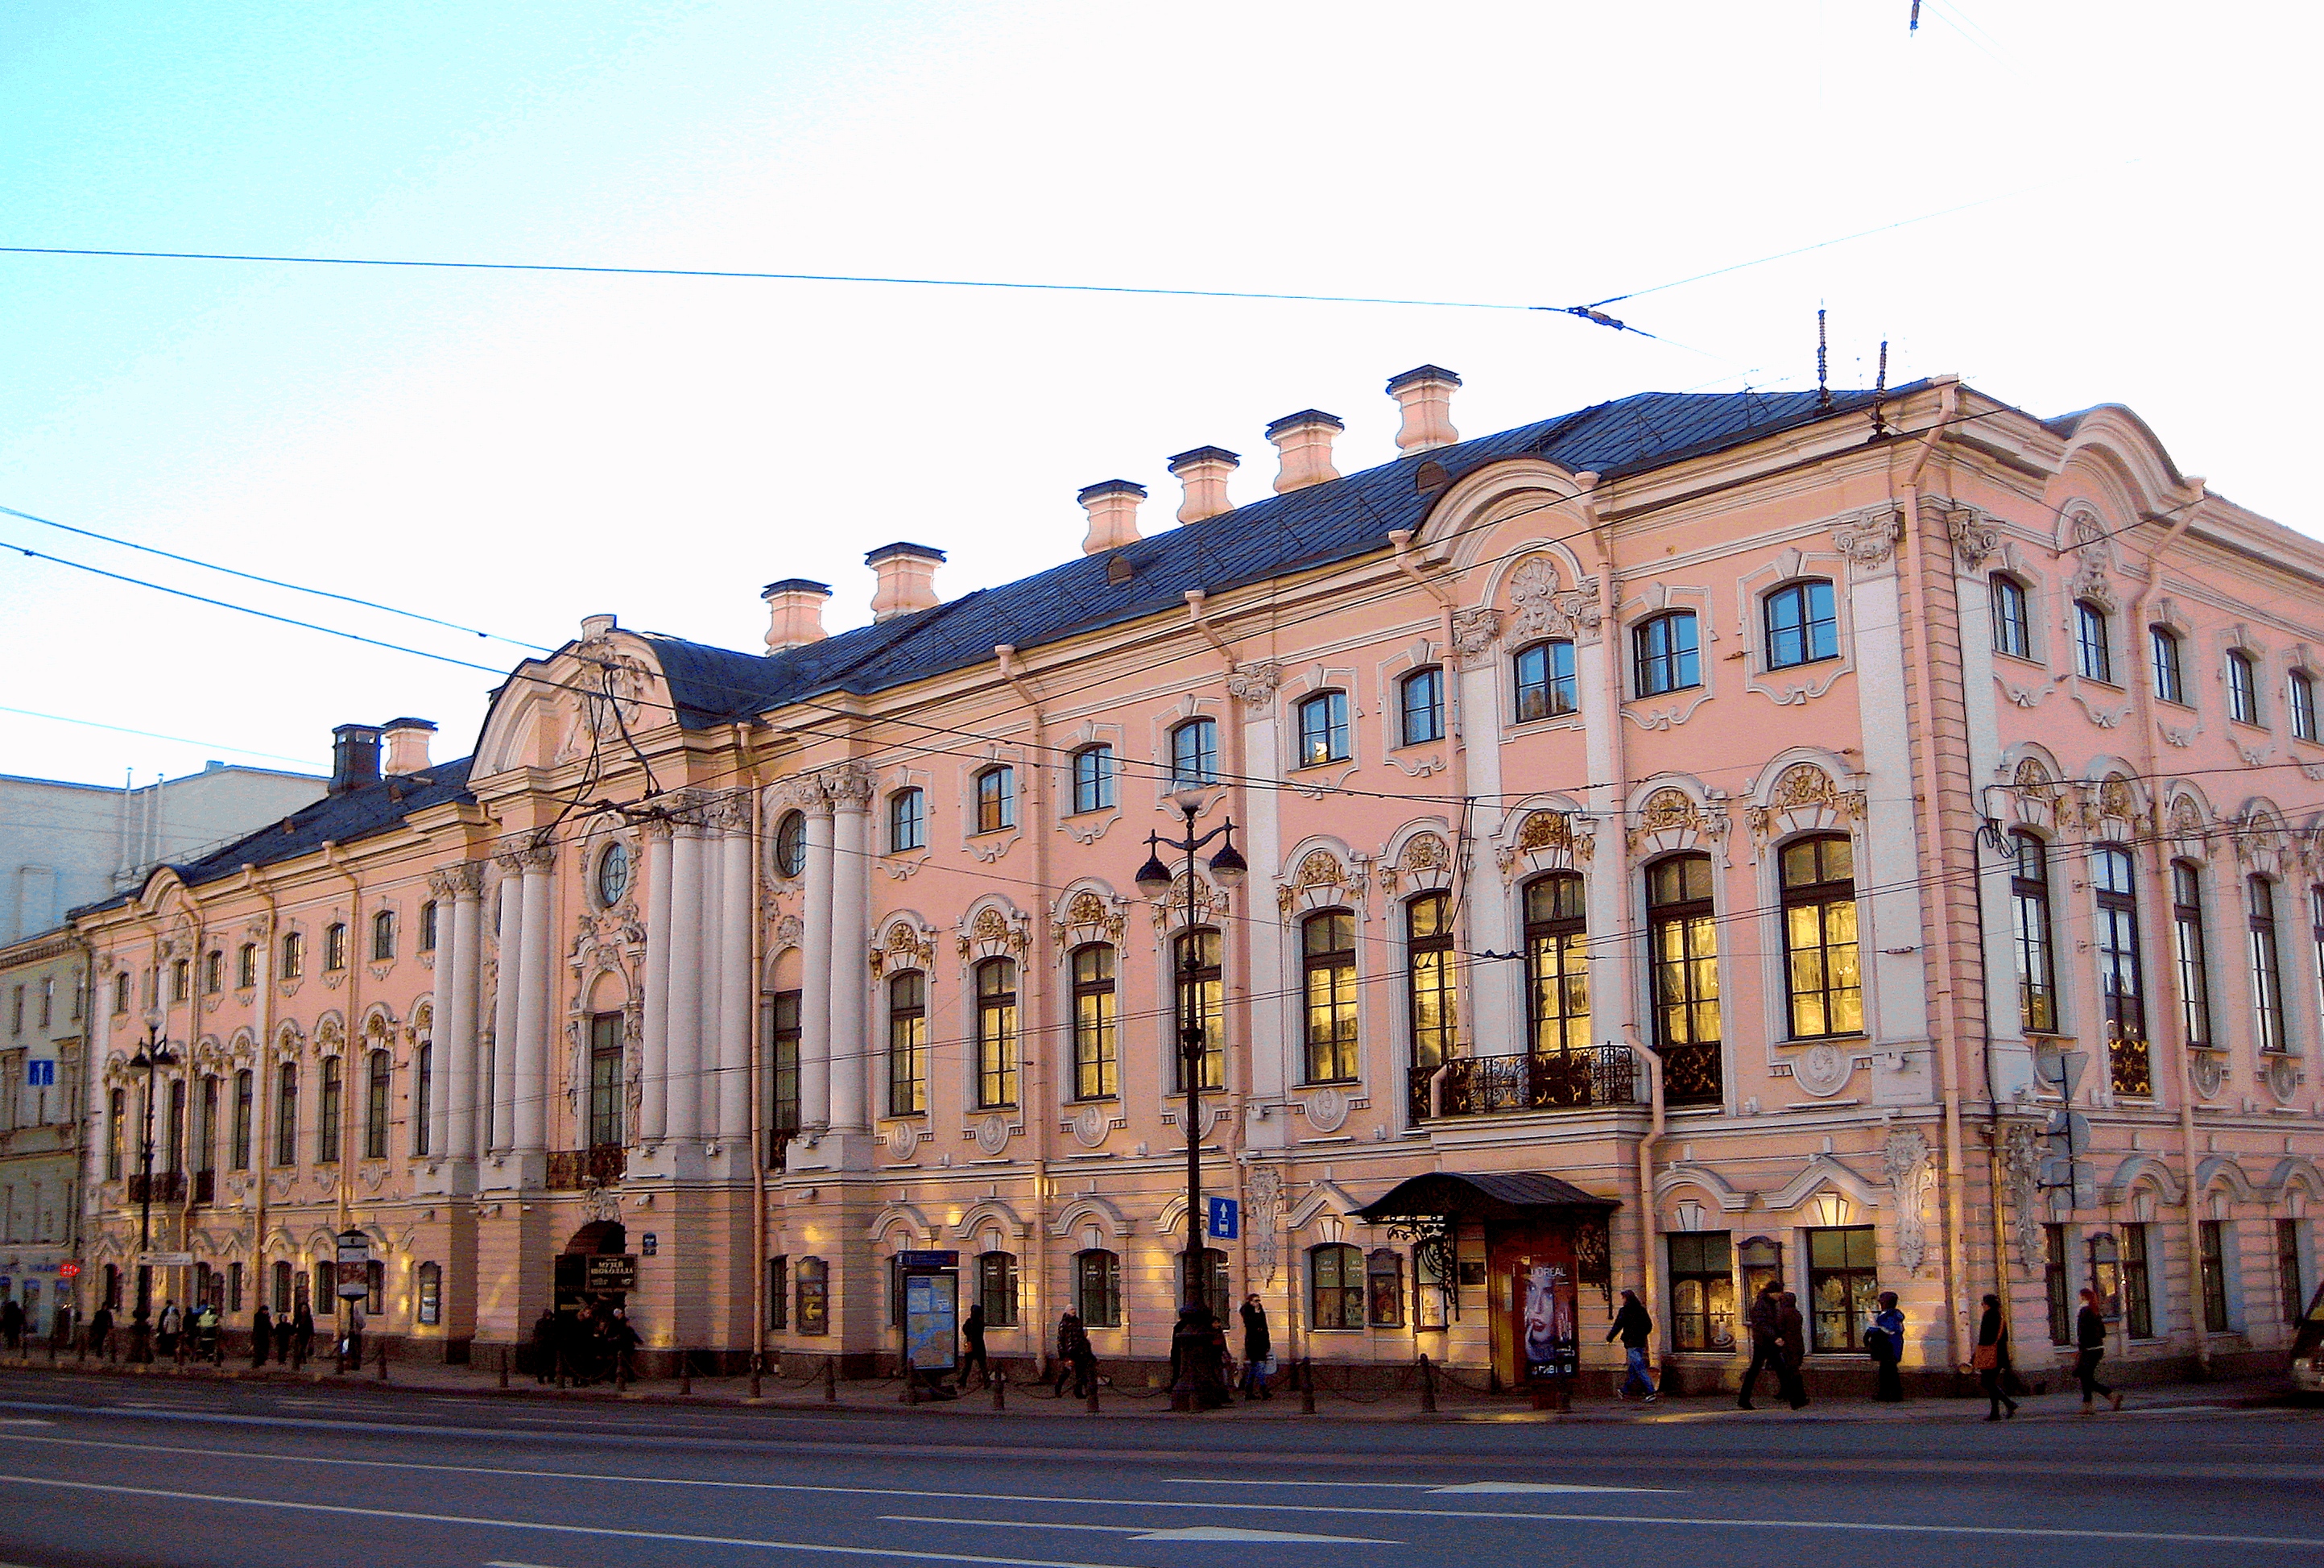 File:246. St. Petersburg. Stroganov Palace.jpg - Wikimedia Commons